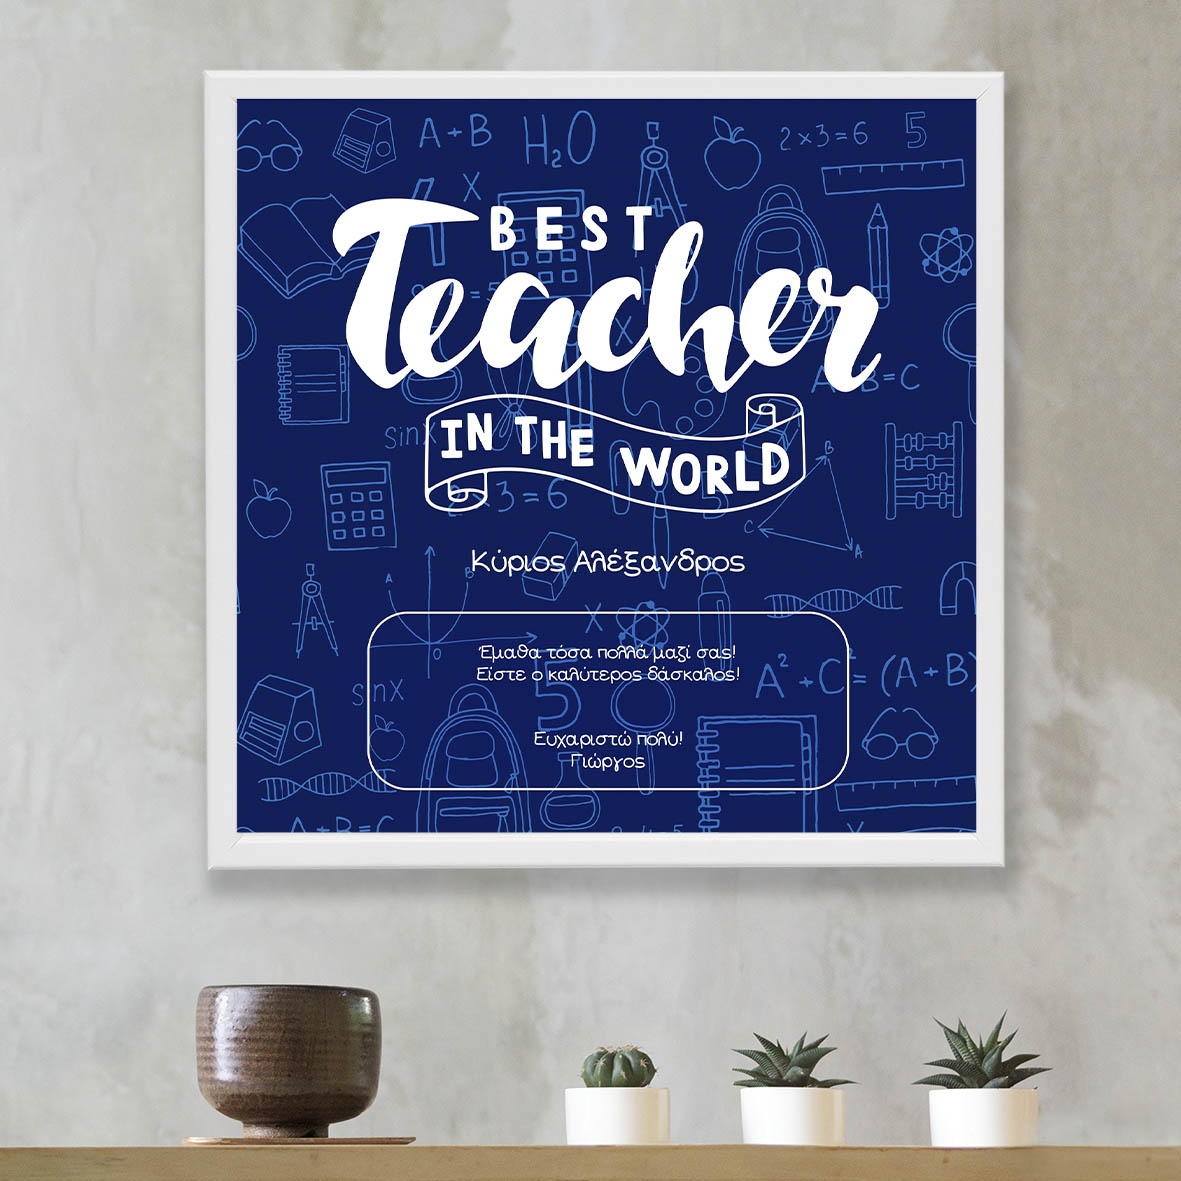 Best Teacher - Phototile